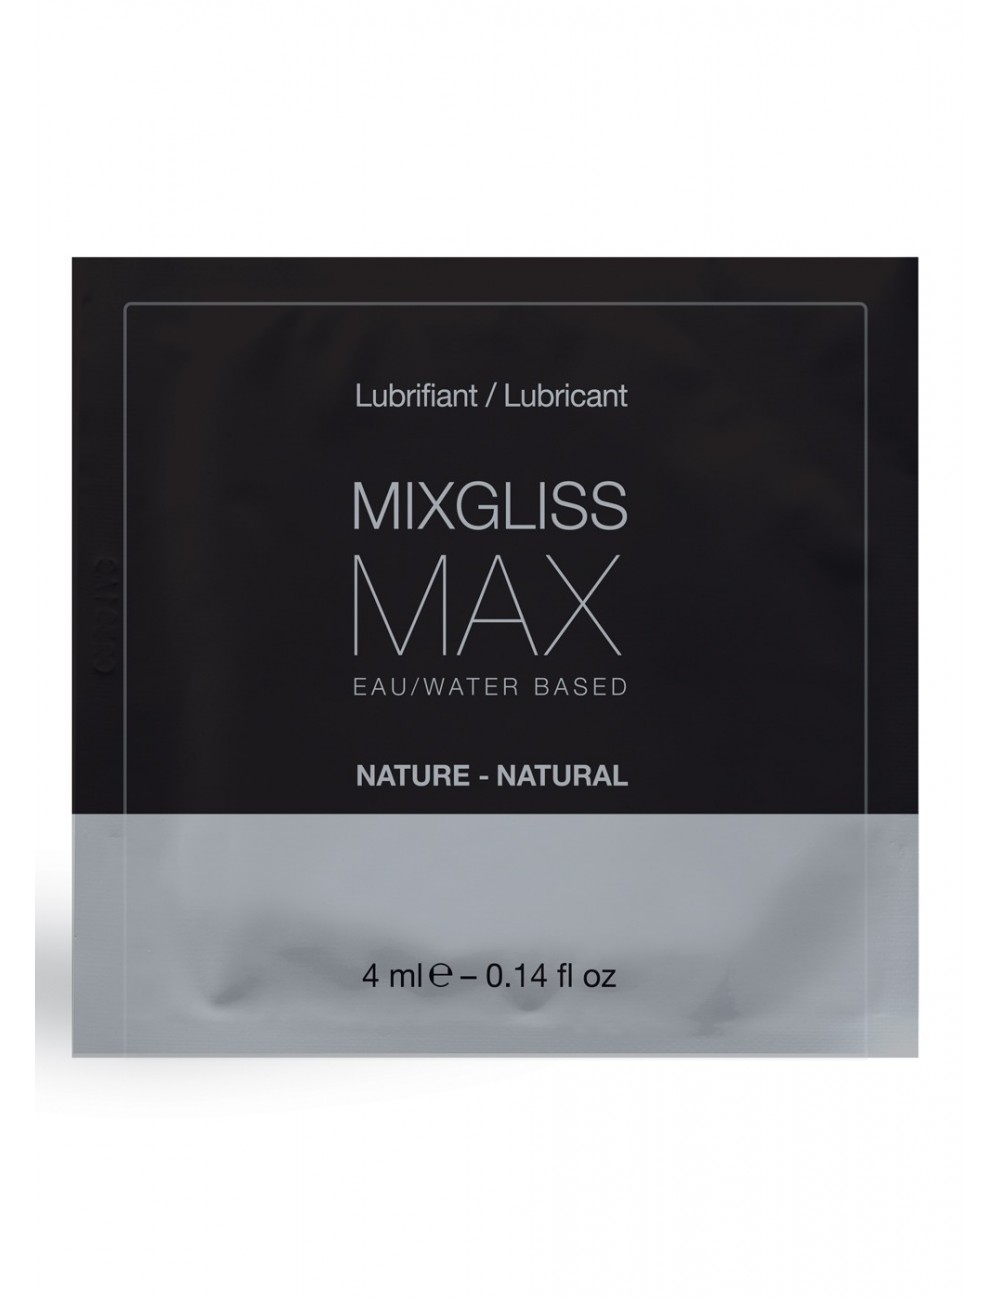 Dosette de Lubrifiant à base d'eau Anal 4 ml - MG-02091 - Lubrifiants - Mixgliss